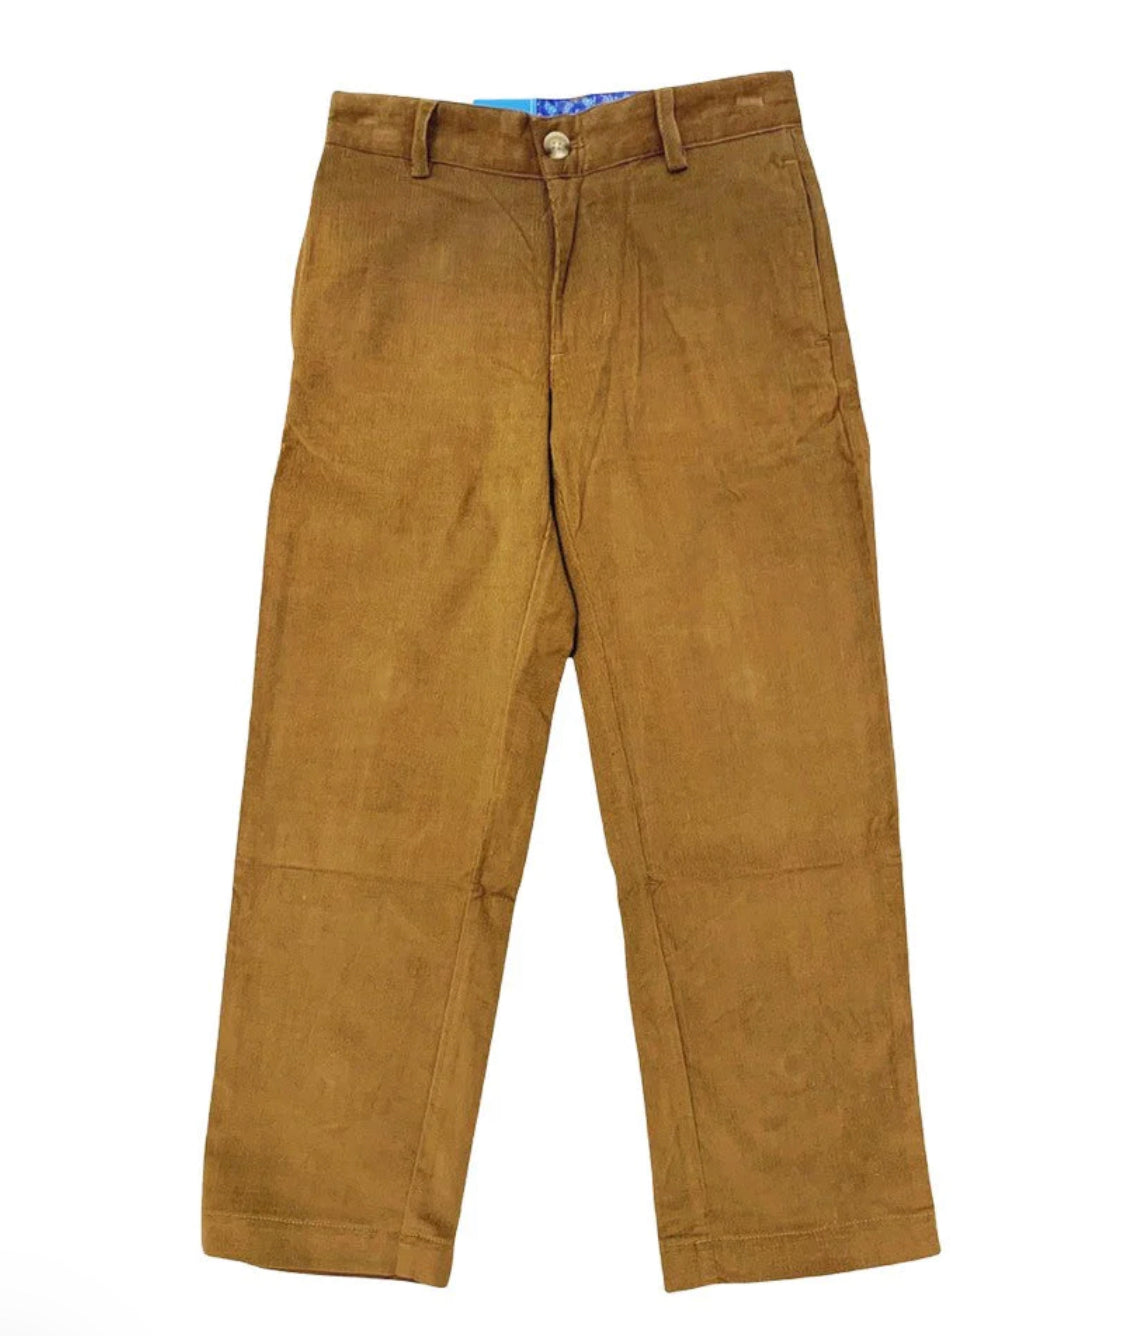 Boys Brown Corduroy Pants